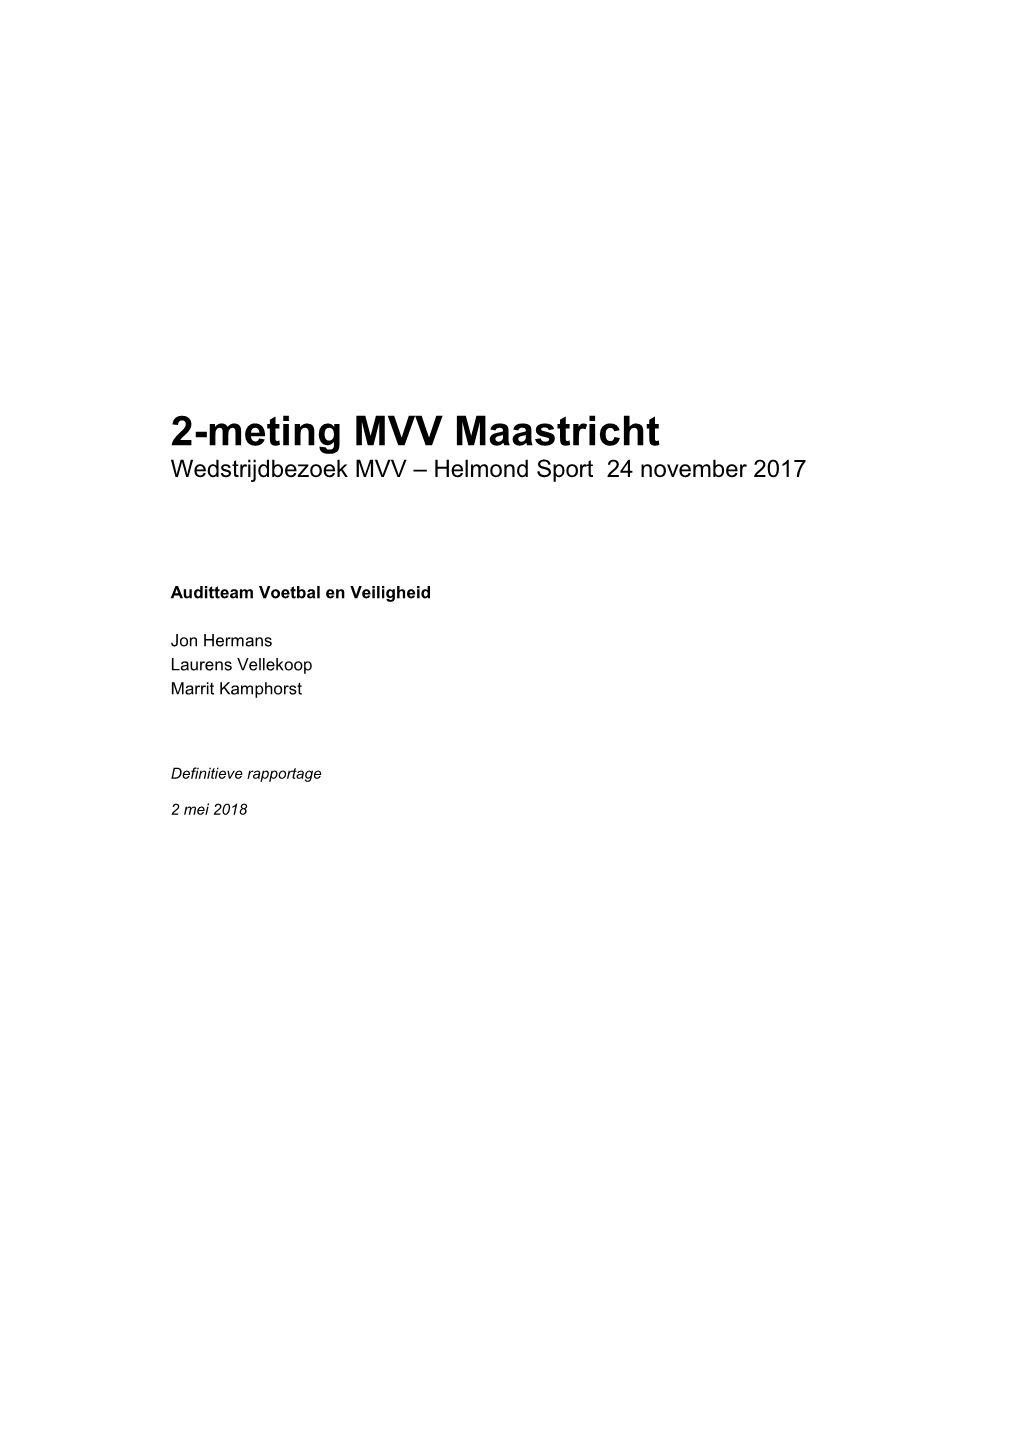 2-Meting MVV Maastricht Wedstrijdbezoek MVV – Helmond Sport 24 November 2017